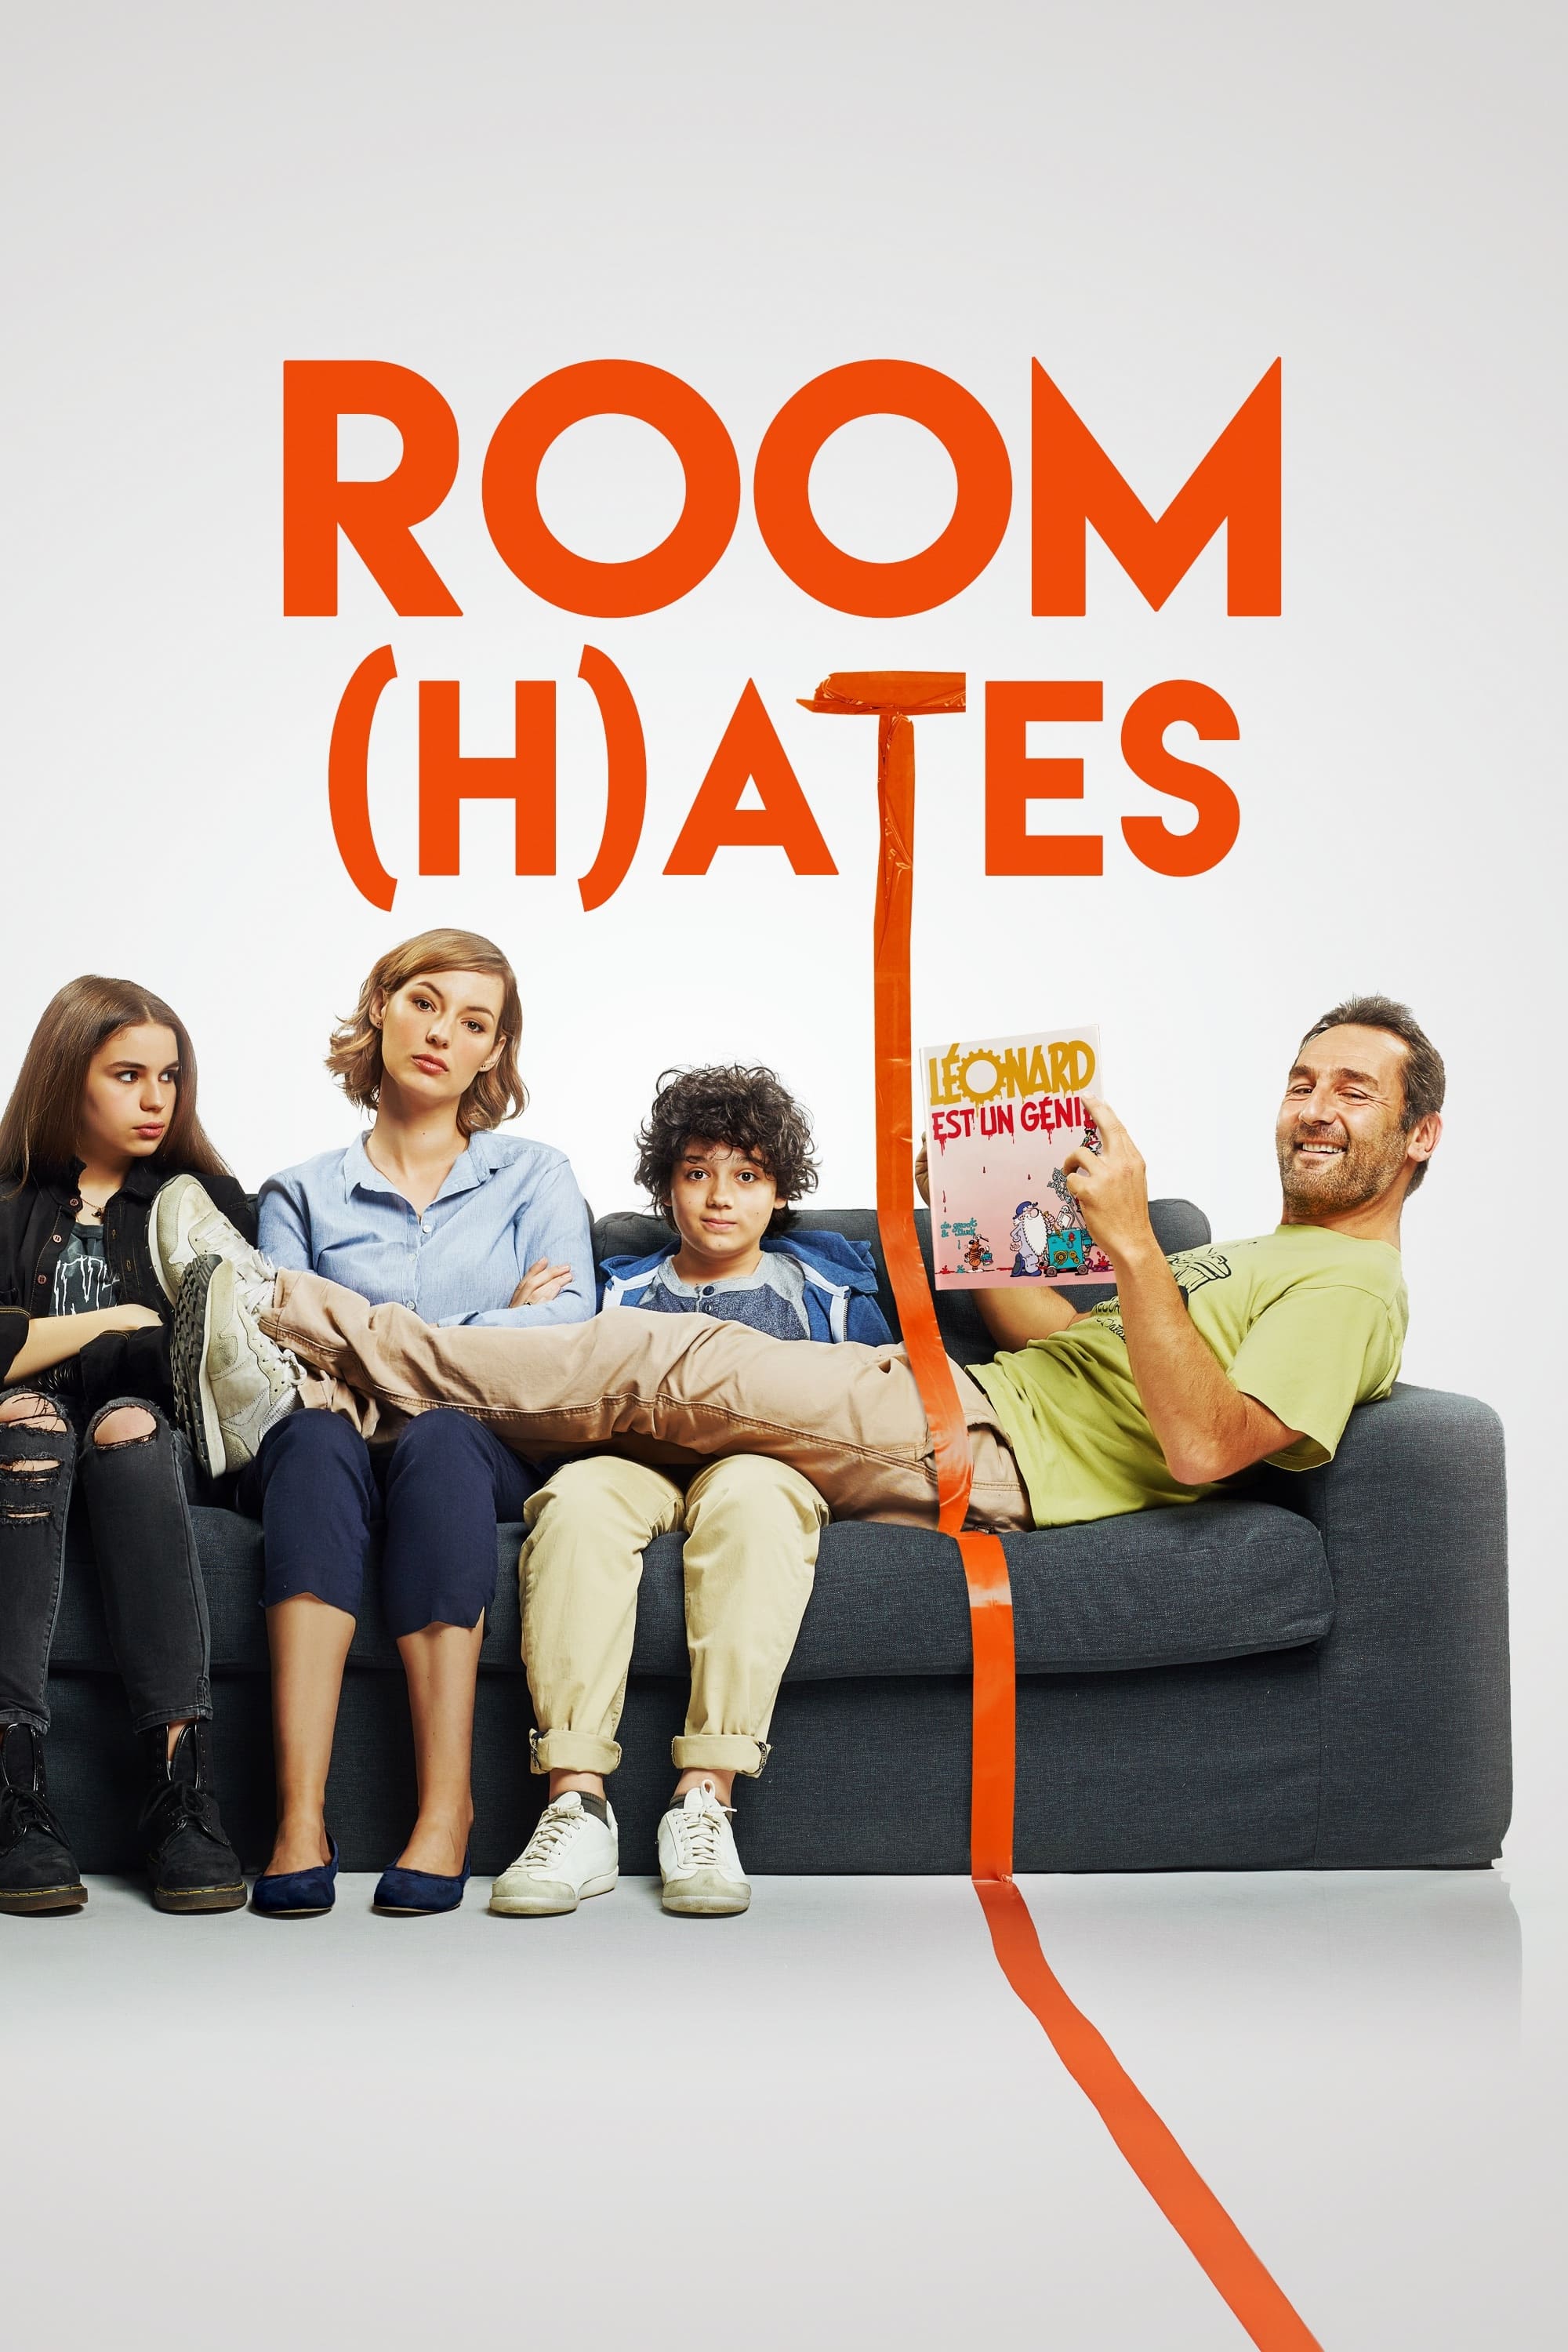 Room(h)ates